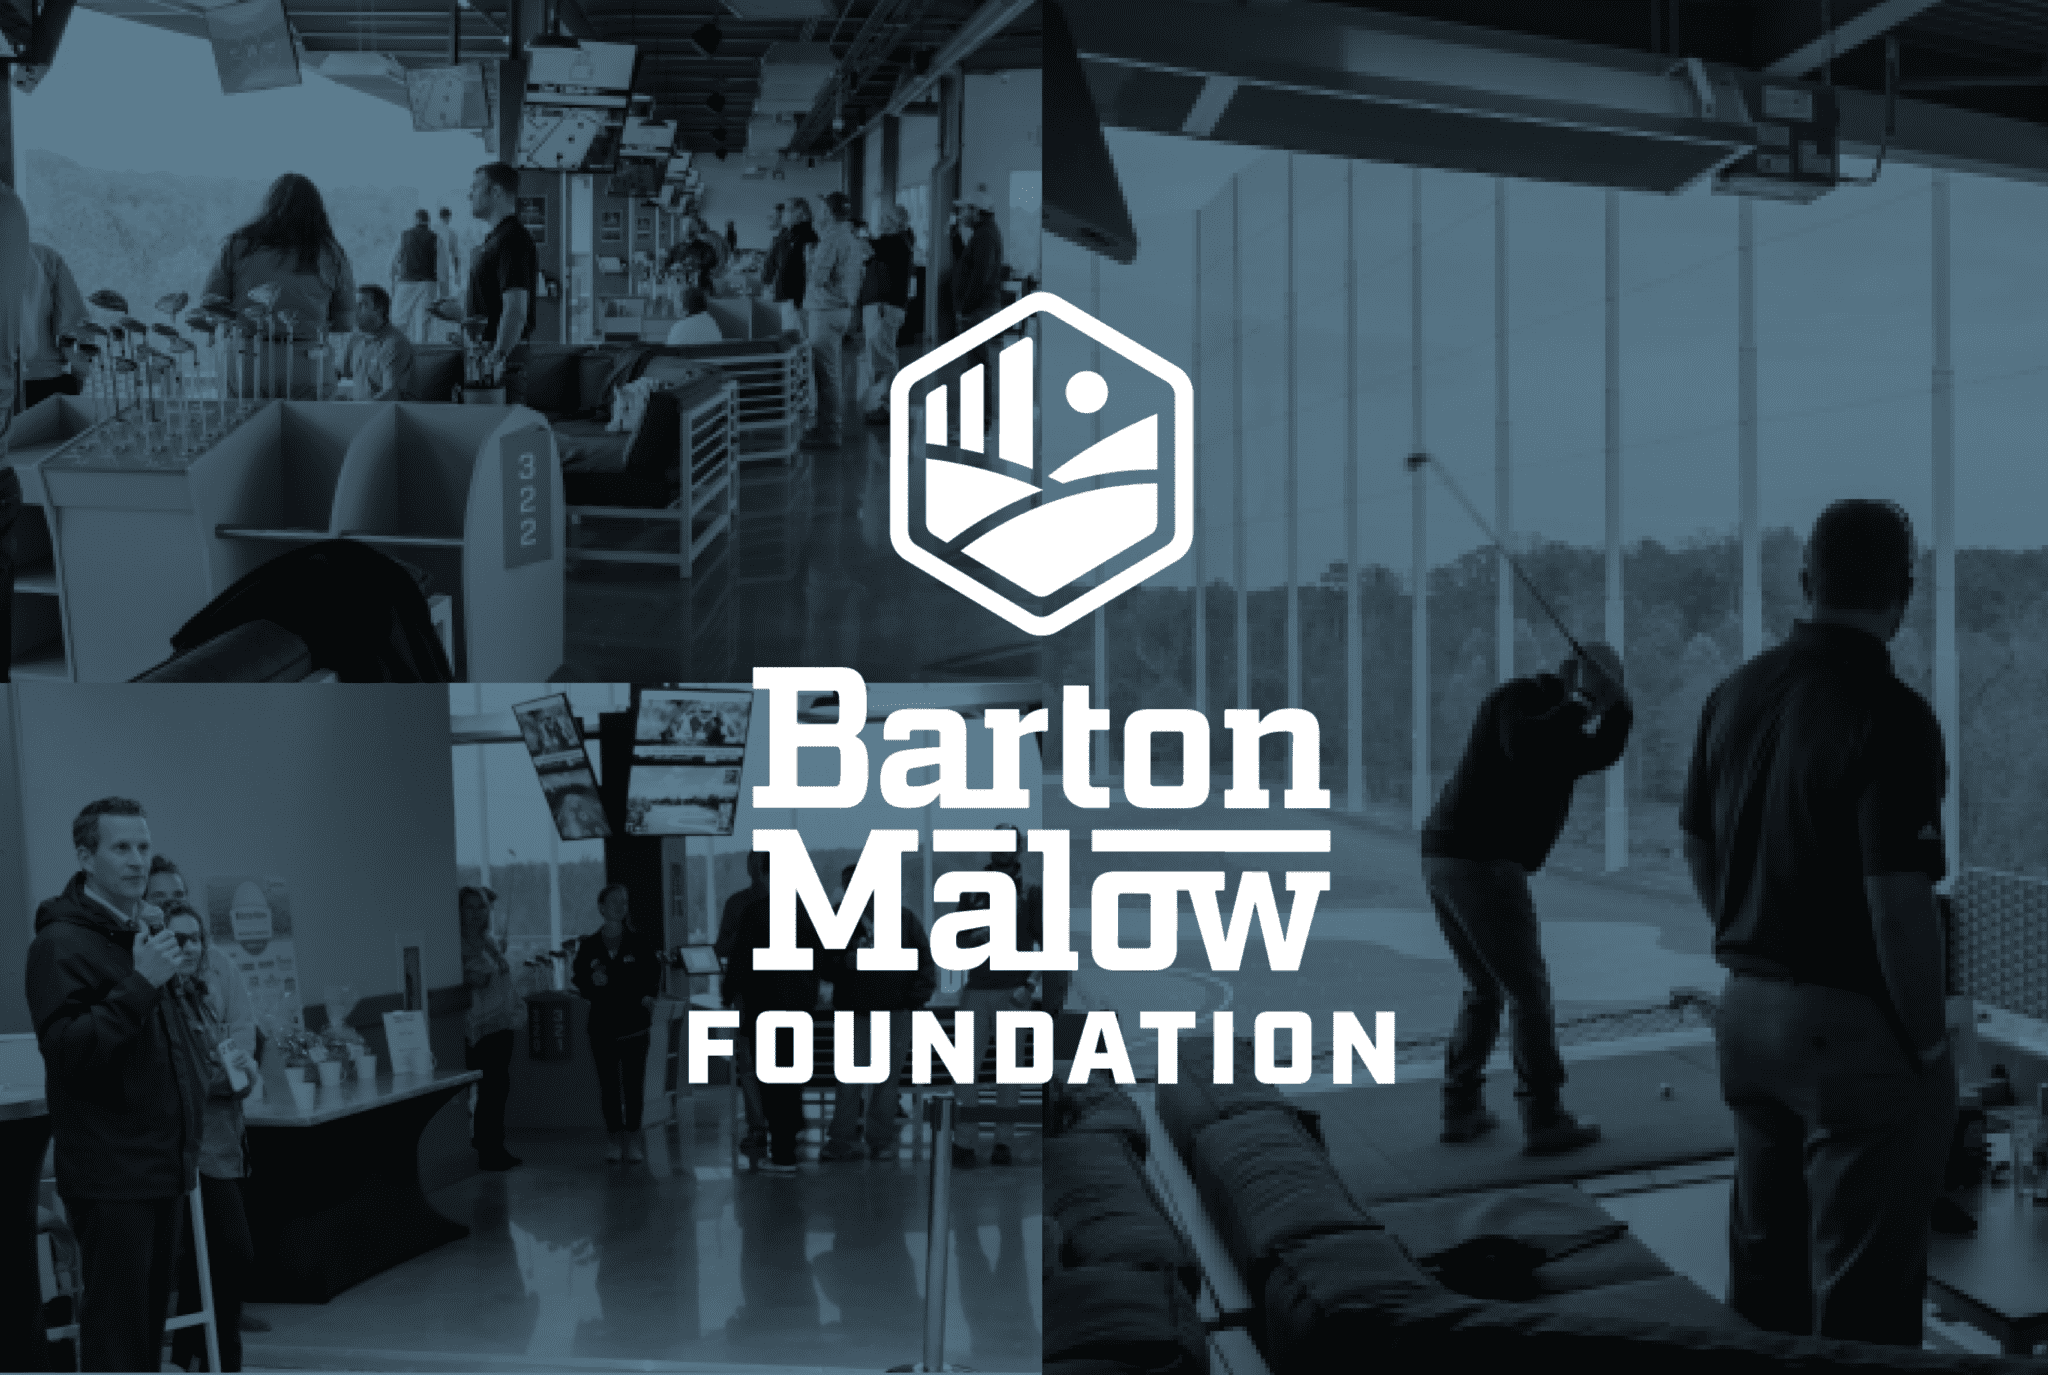 2019 Virginia Barton Malow Foundation Event Collage